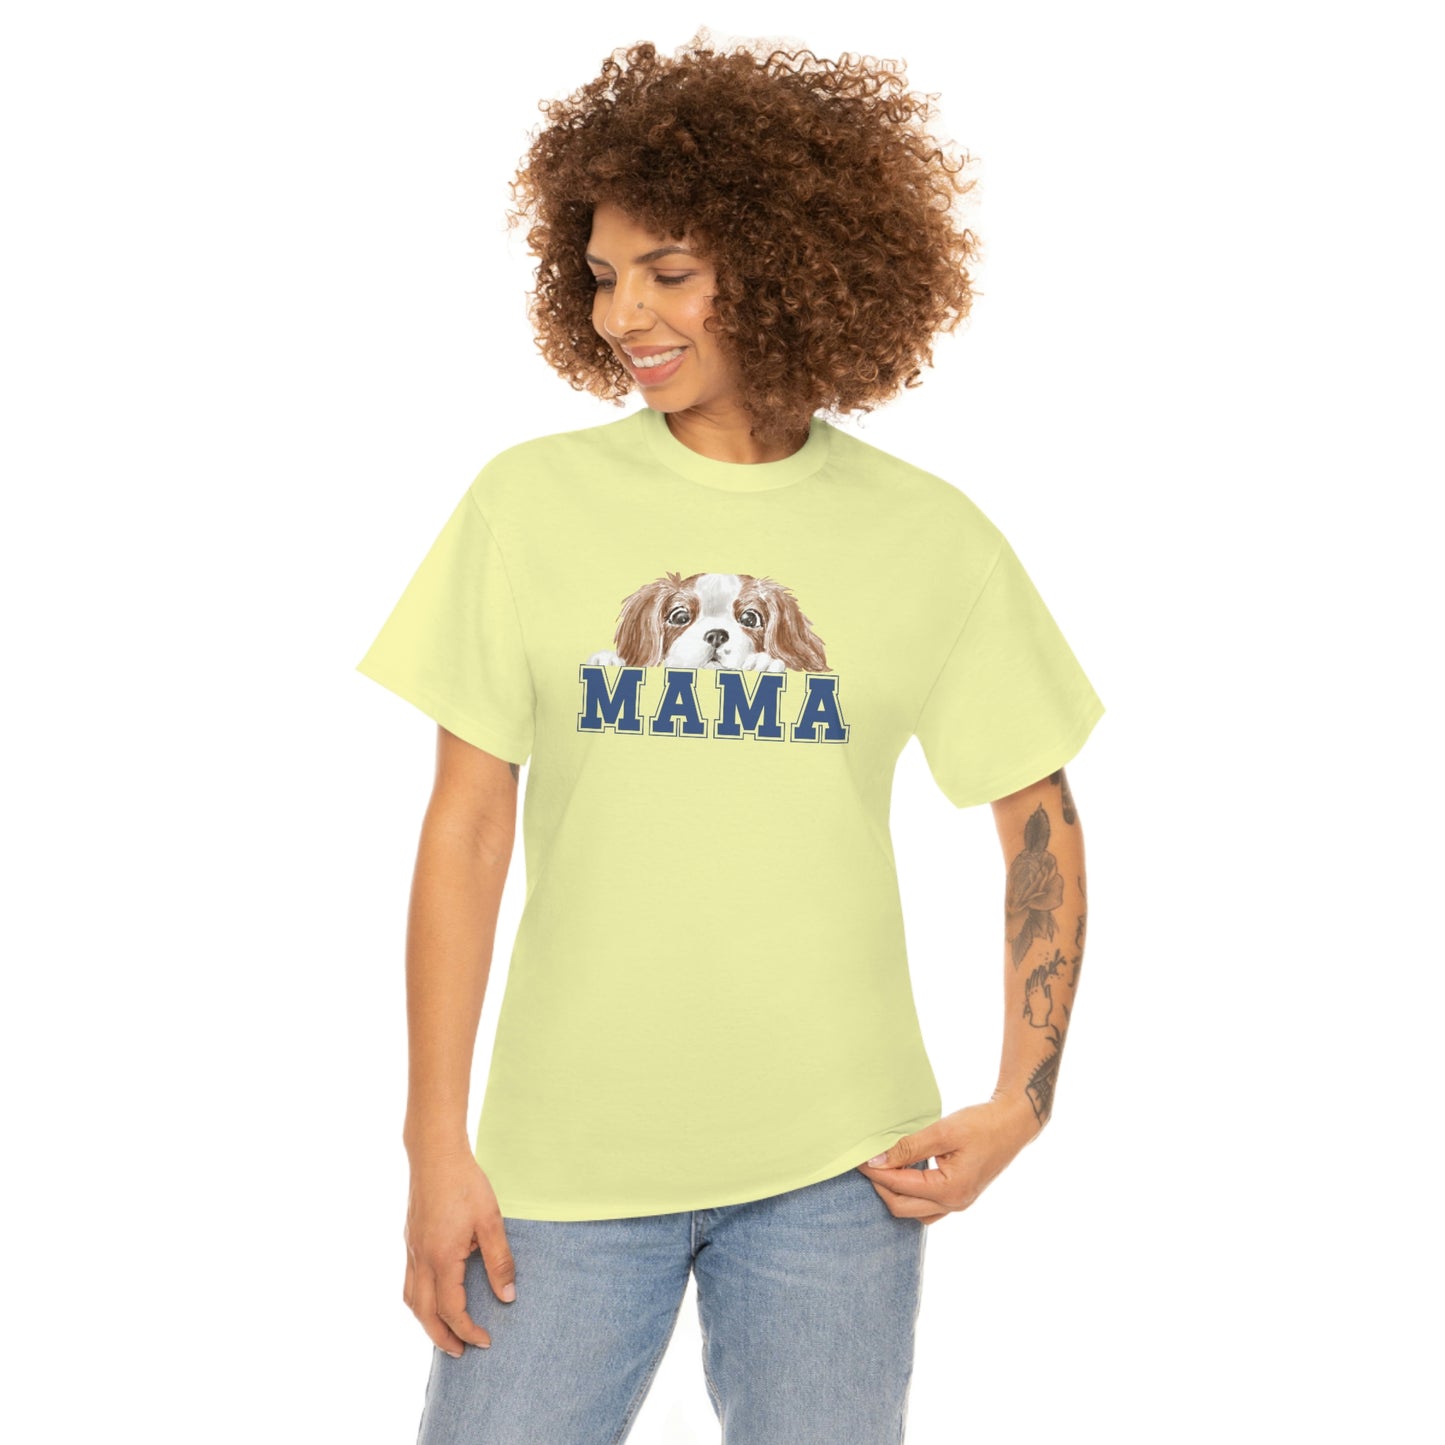 Dog MAMA Cute Dog/Puppy Graphic tee shirt